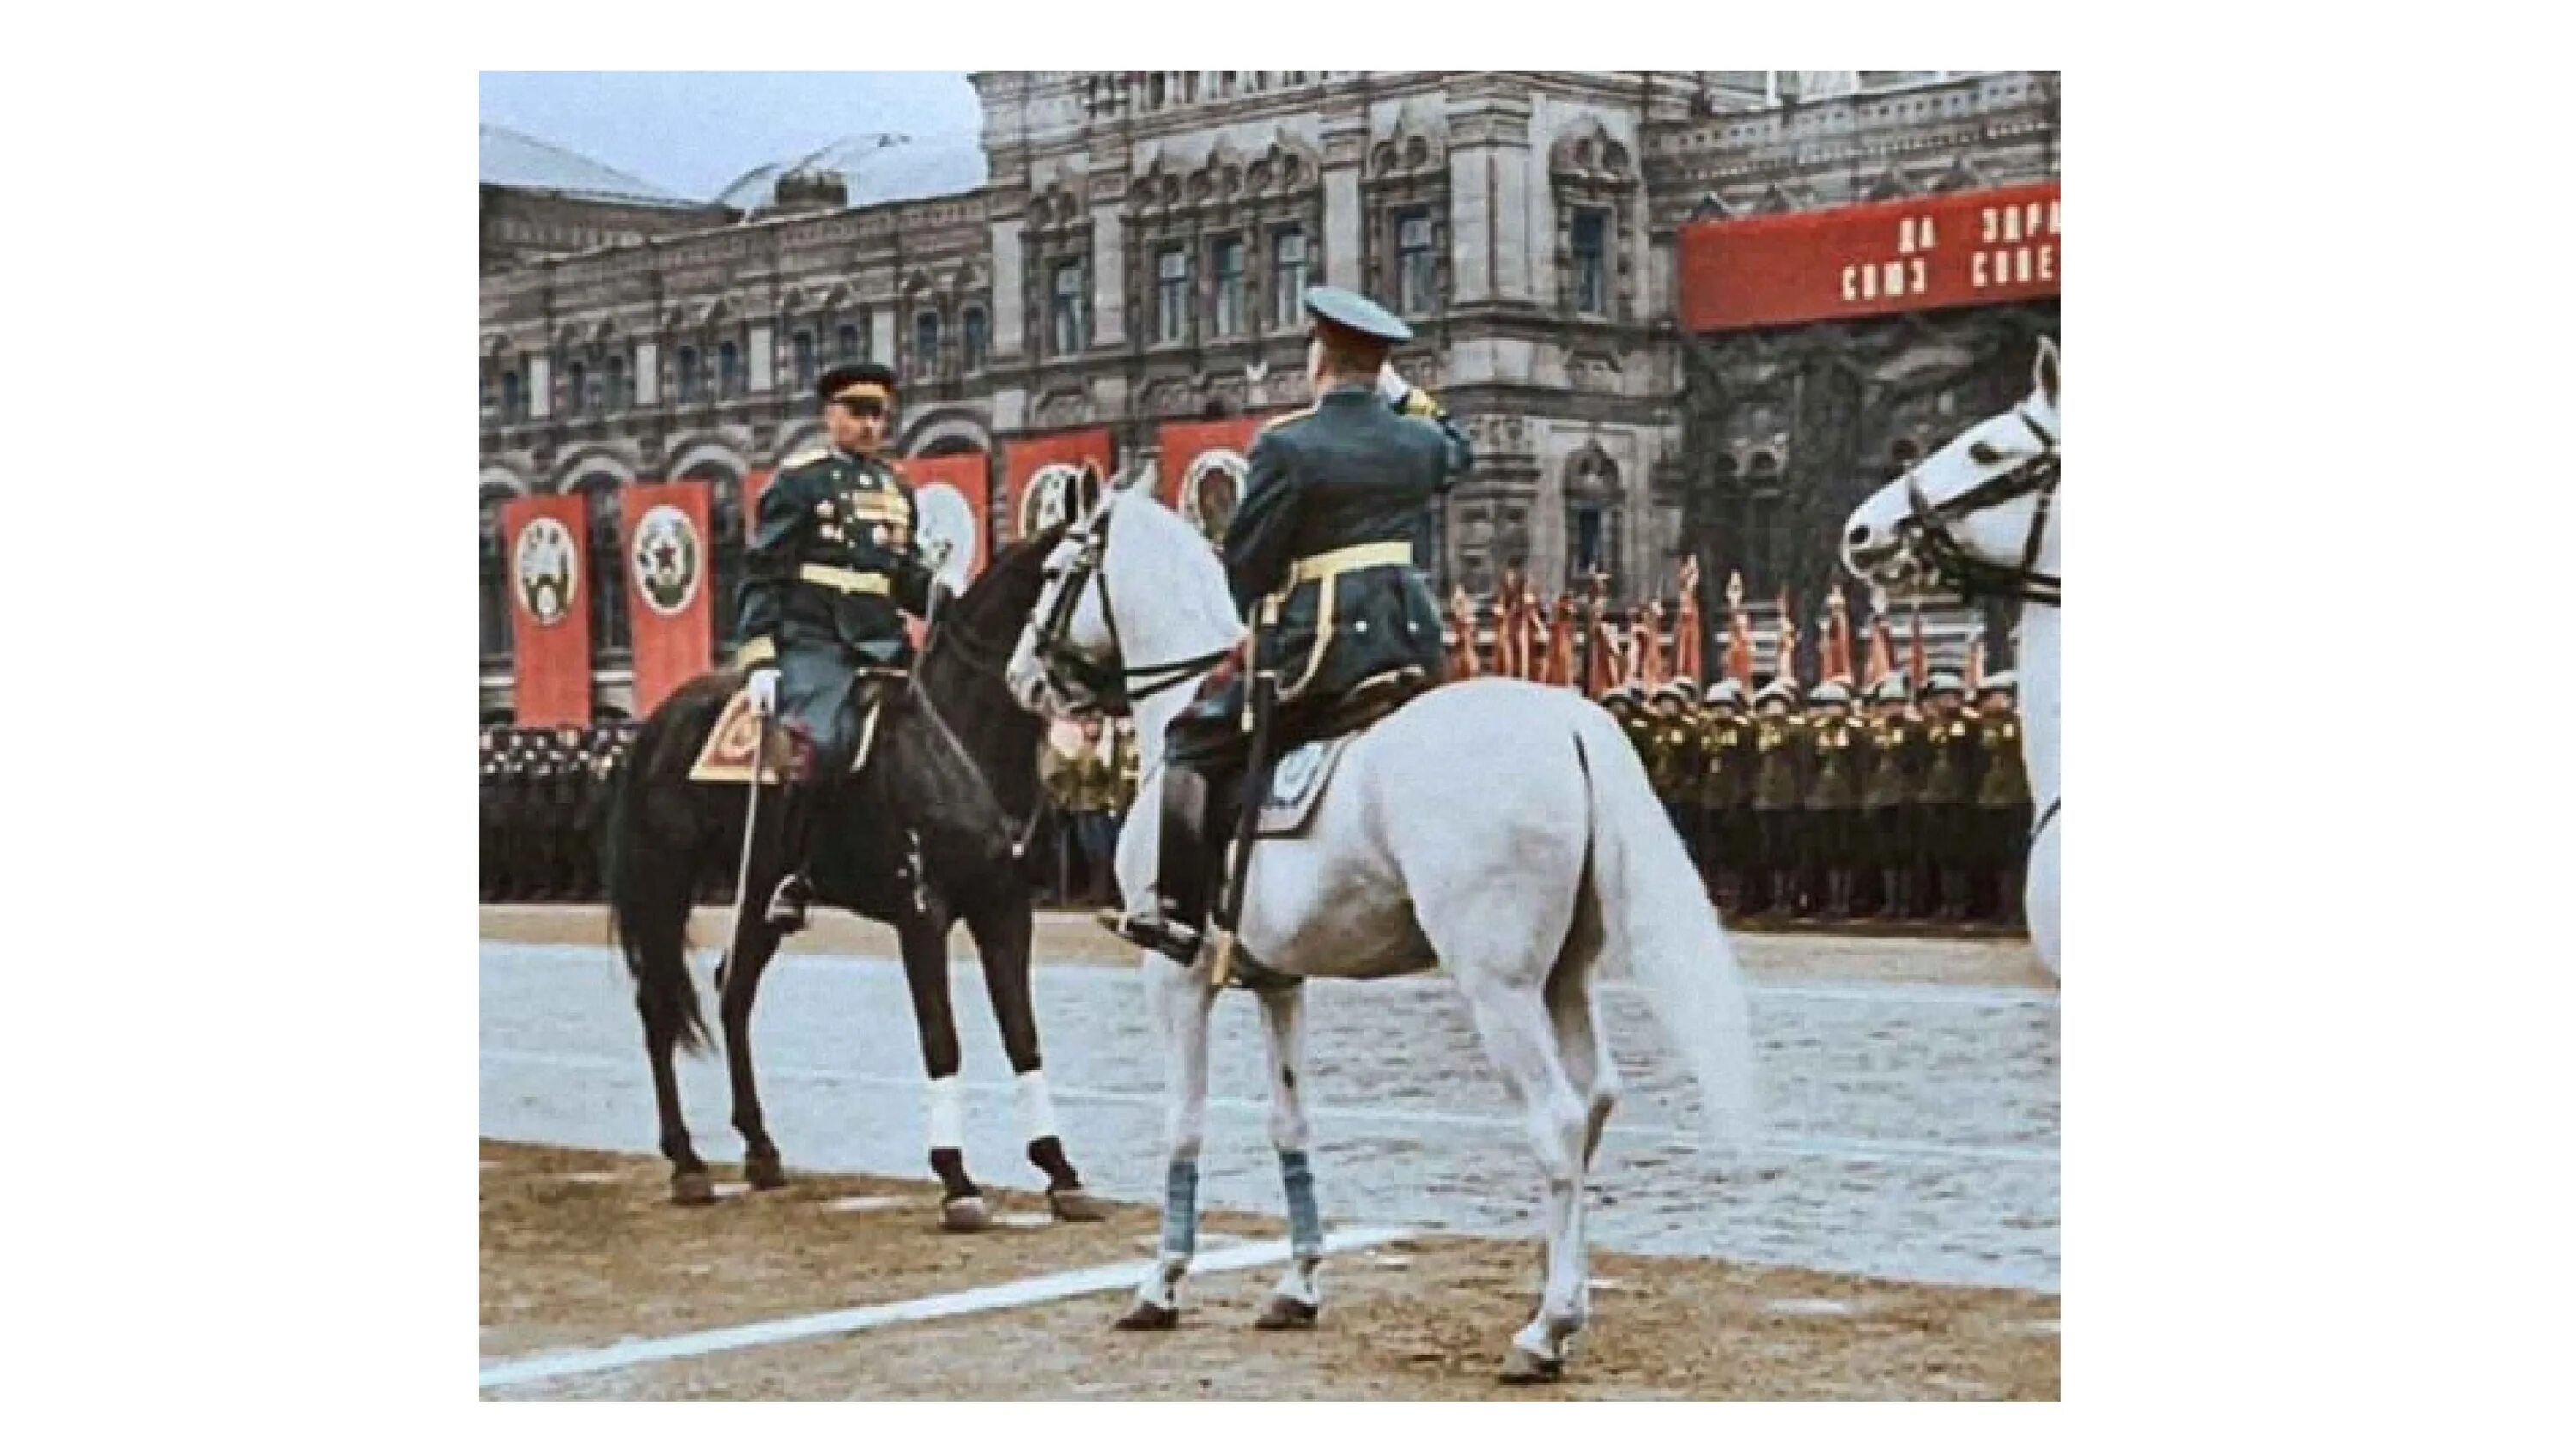 24 июня парад победы. 23 Июня 1945 г. 24 Июня 1945 банкет. Фотография 14 июня 1945. Парад победителей фильм Алексея Денисова.